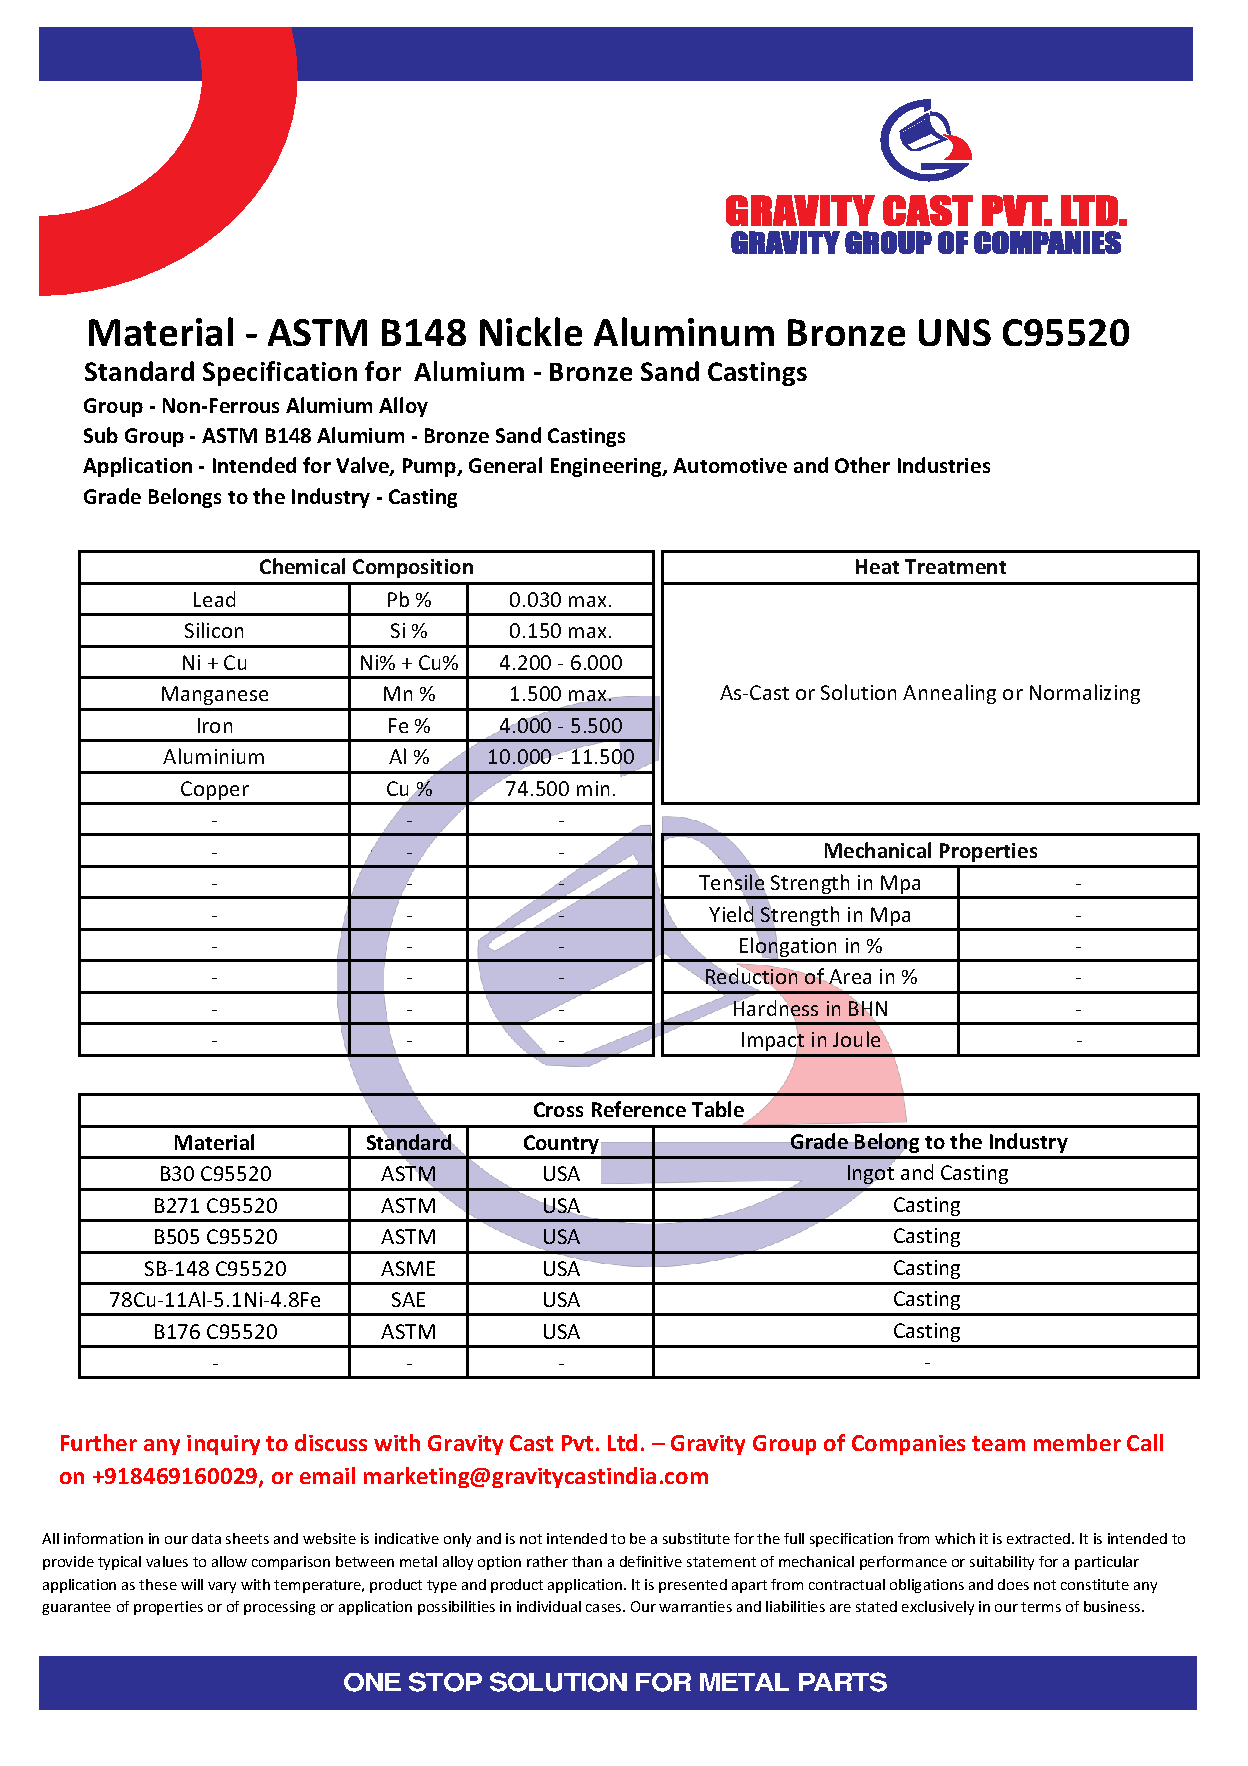 ASTM B148 Nickle Aluminum Bronze UNS C95520.pdf